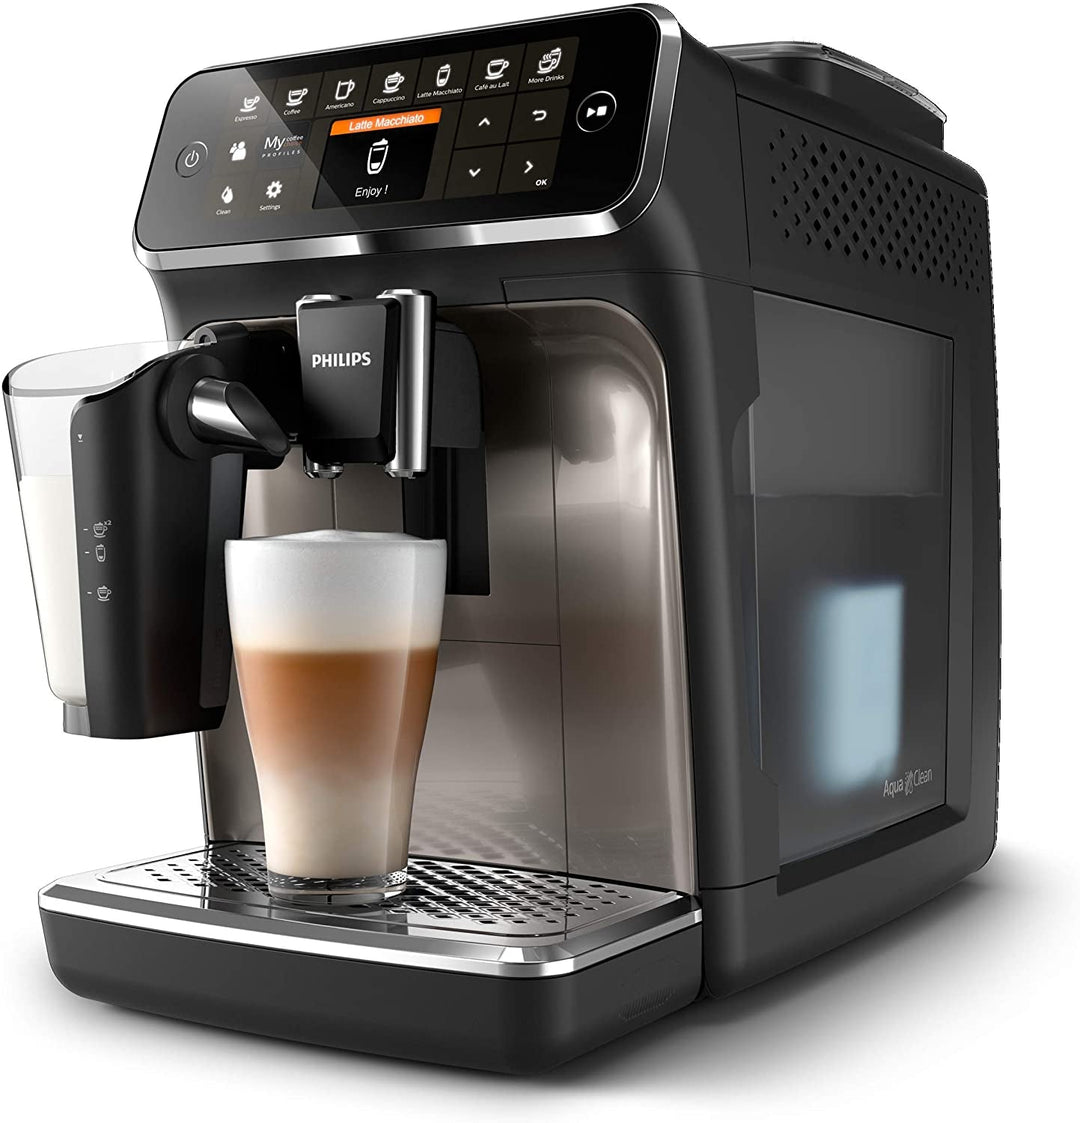 PHILIPS 4300 Series Fully Automatic Espresso Machine